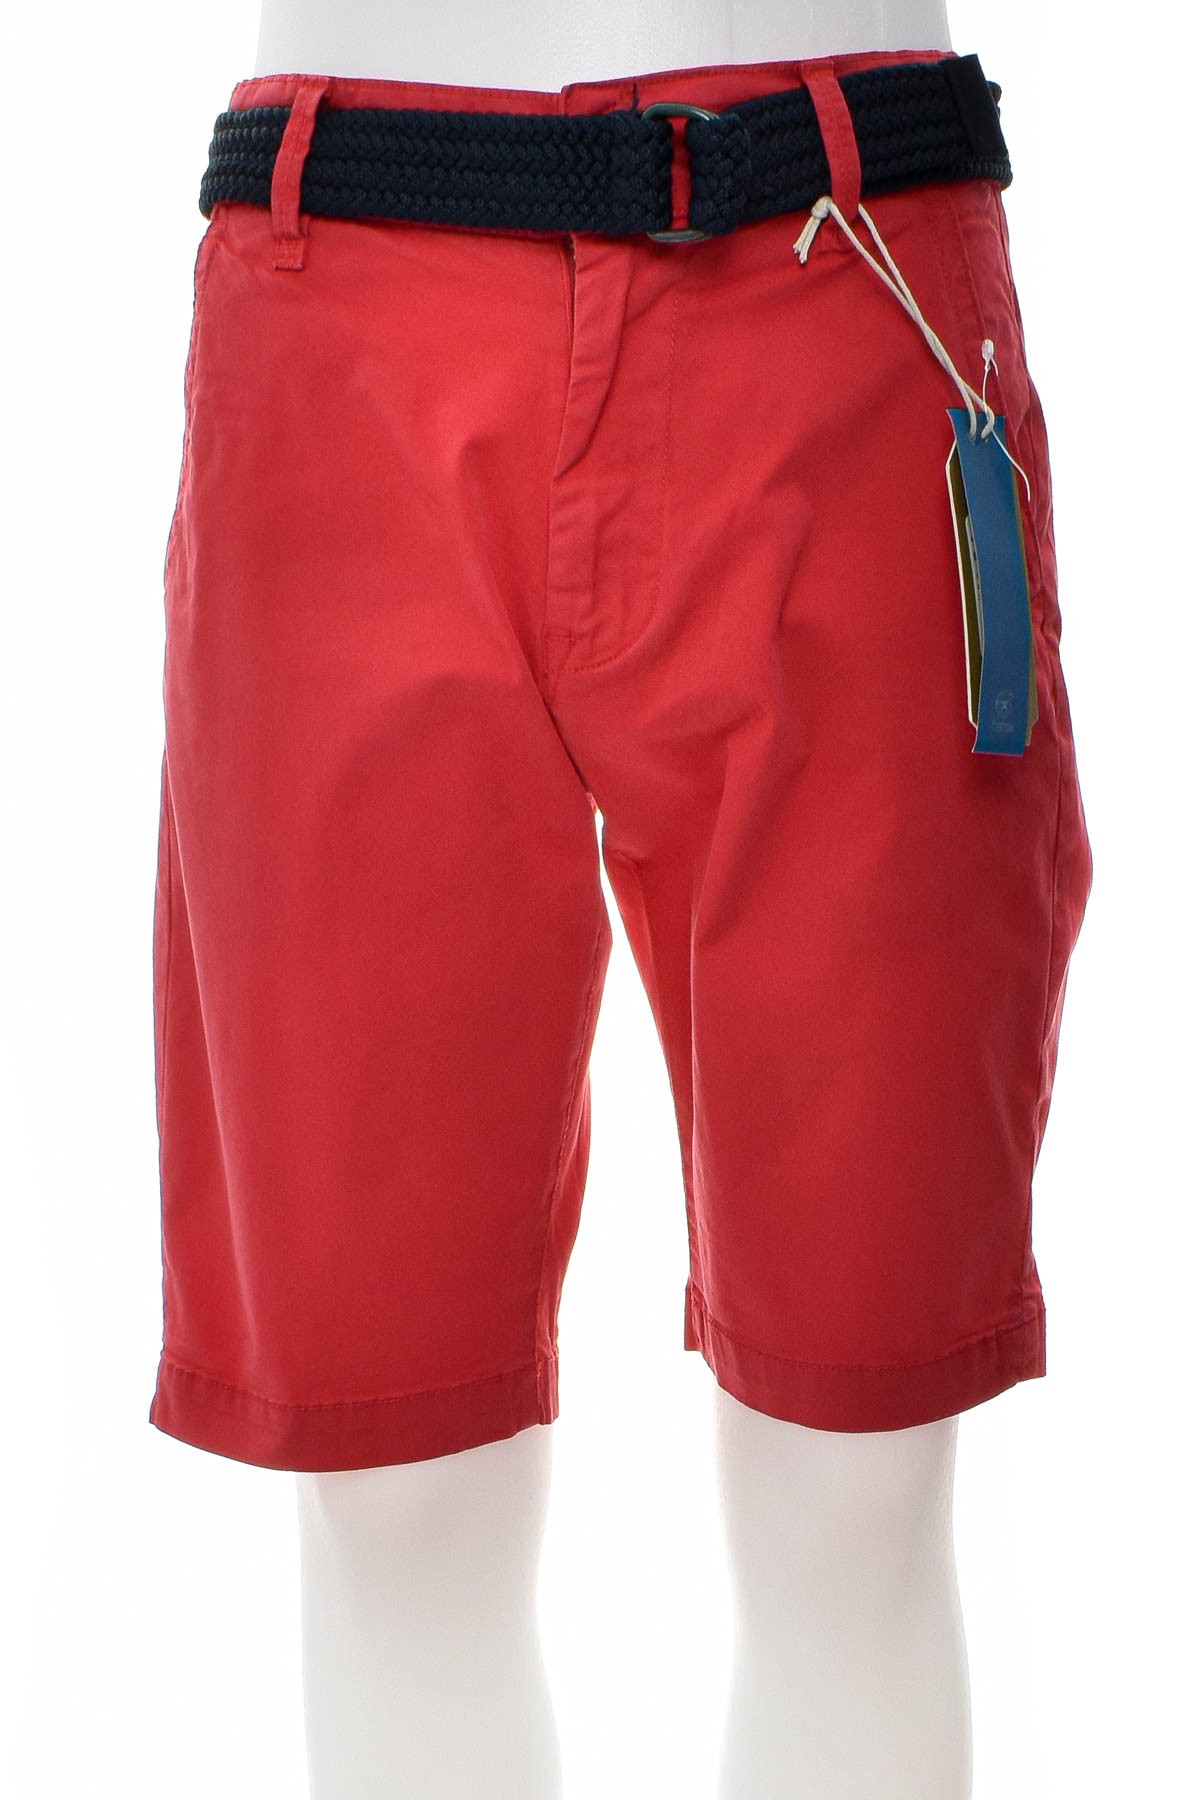 Men's shorts - Petrol Industries Co - 0